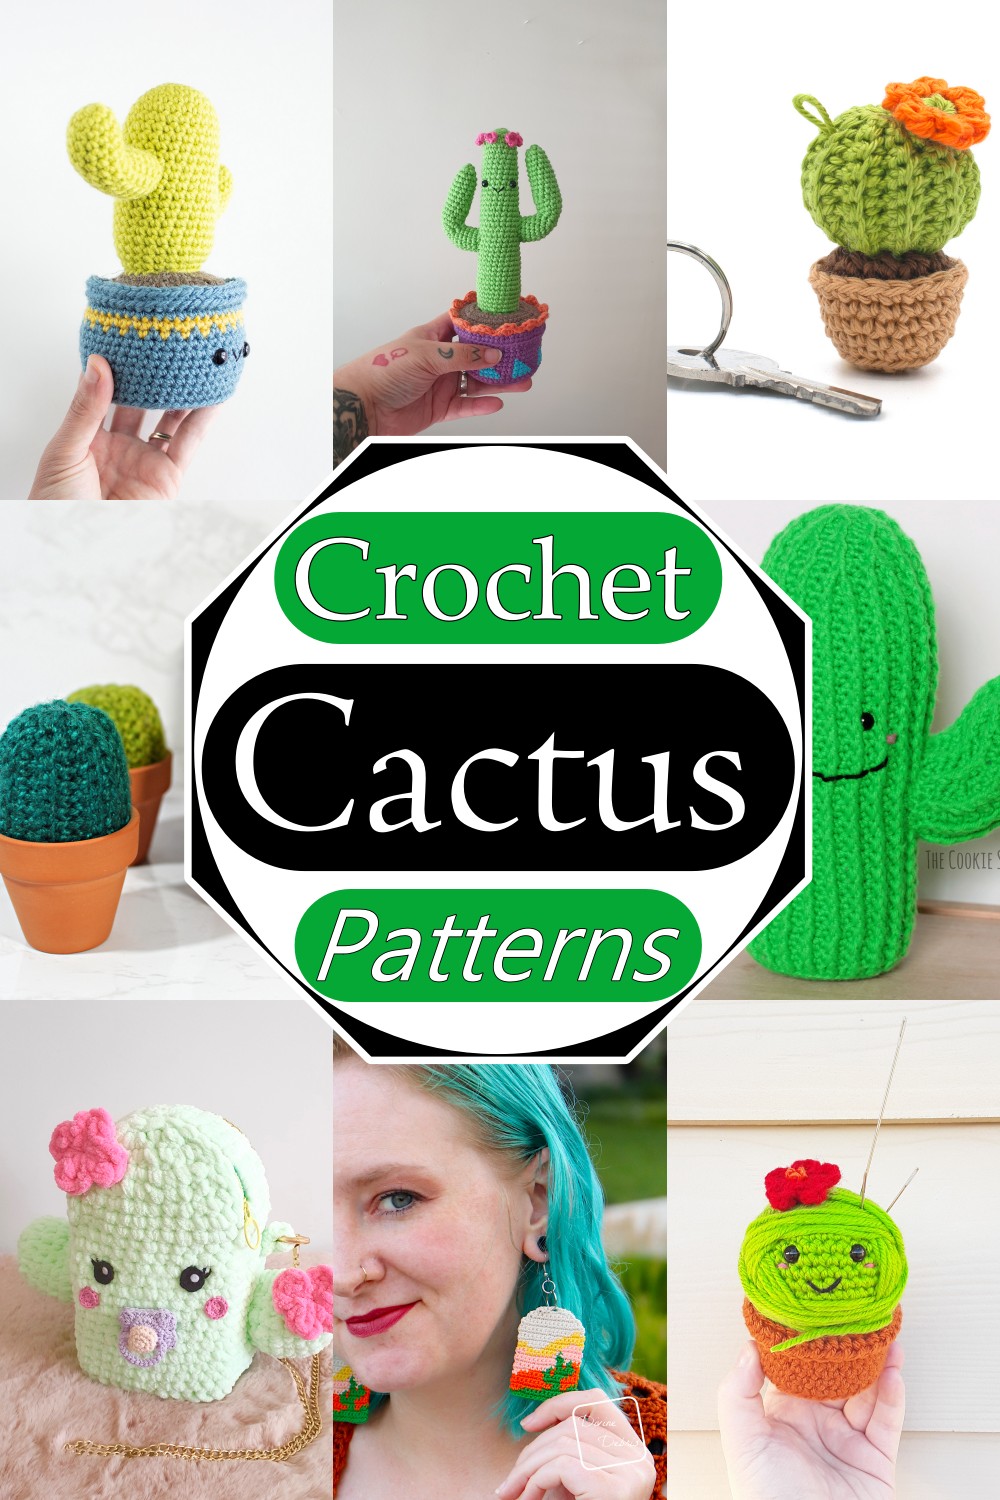 21 Free Crochet Cactus Patterns For A Dessert Garden At Home!